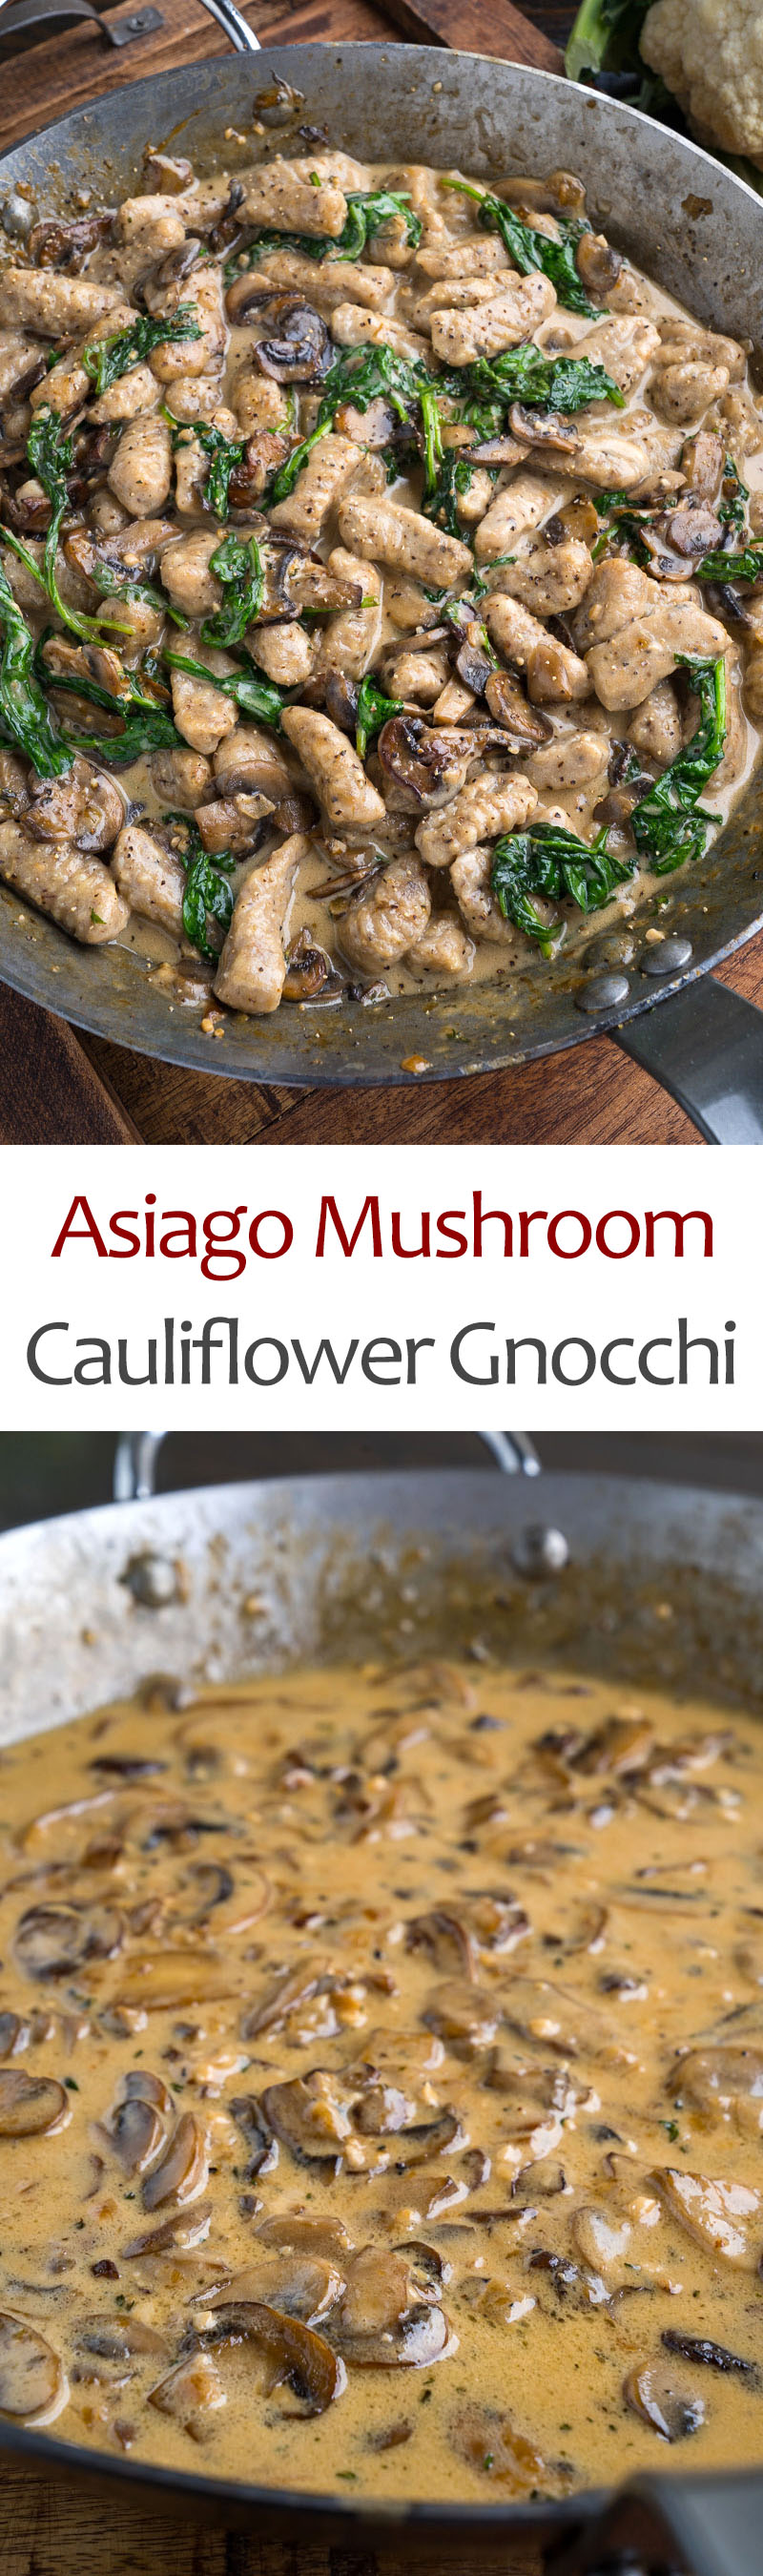 Cauliflower Gnocchi in Asiago Mushroom and Spinach Sauce